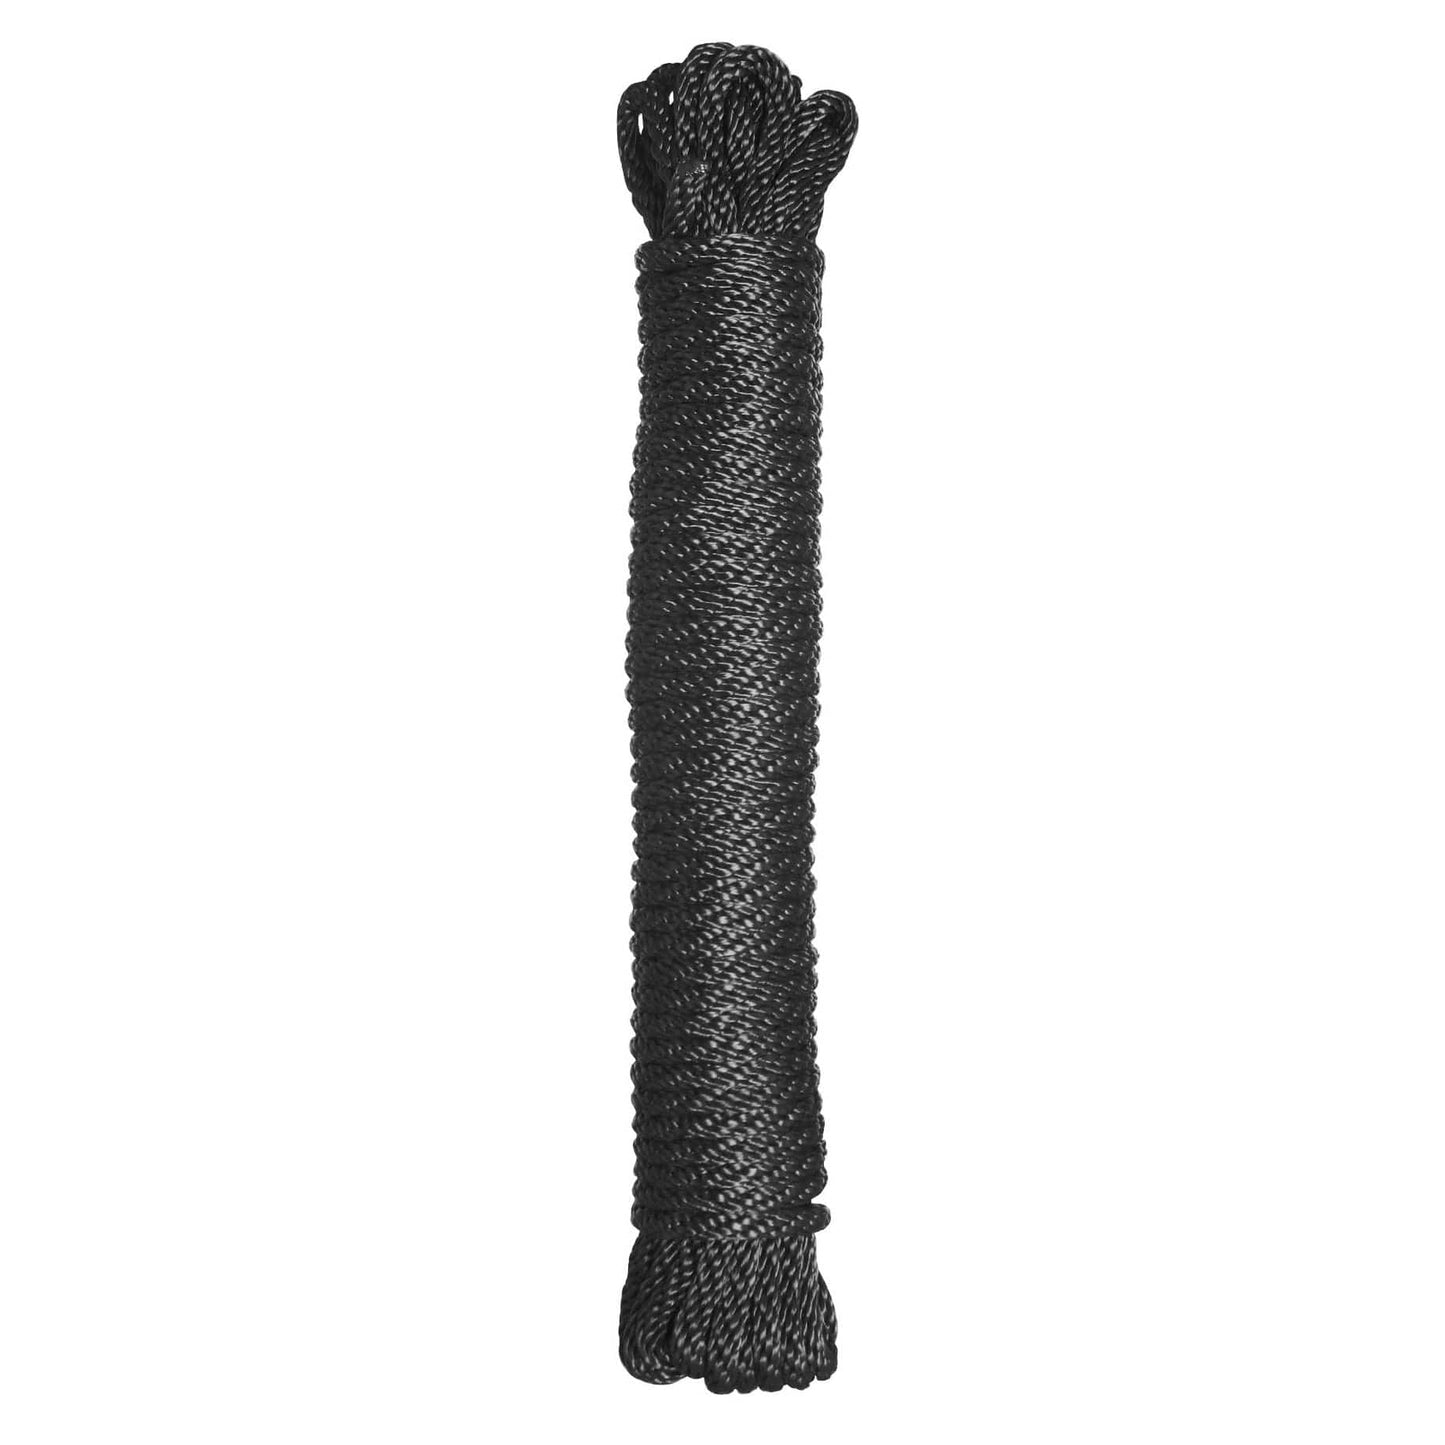 Master Series Rope 600" Premium Black Nylon Bondage Rope- Feet at the Haus of Shag